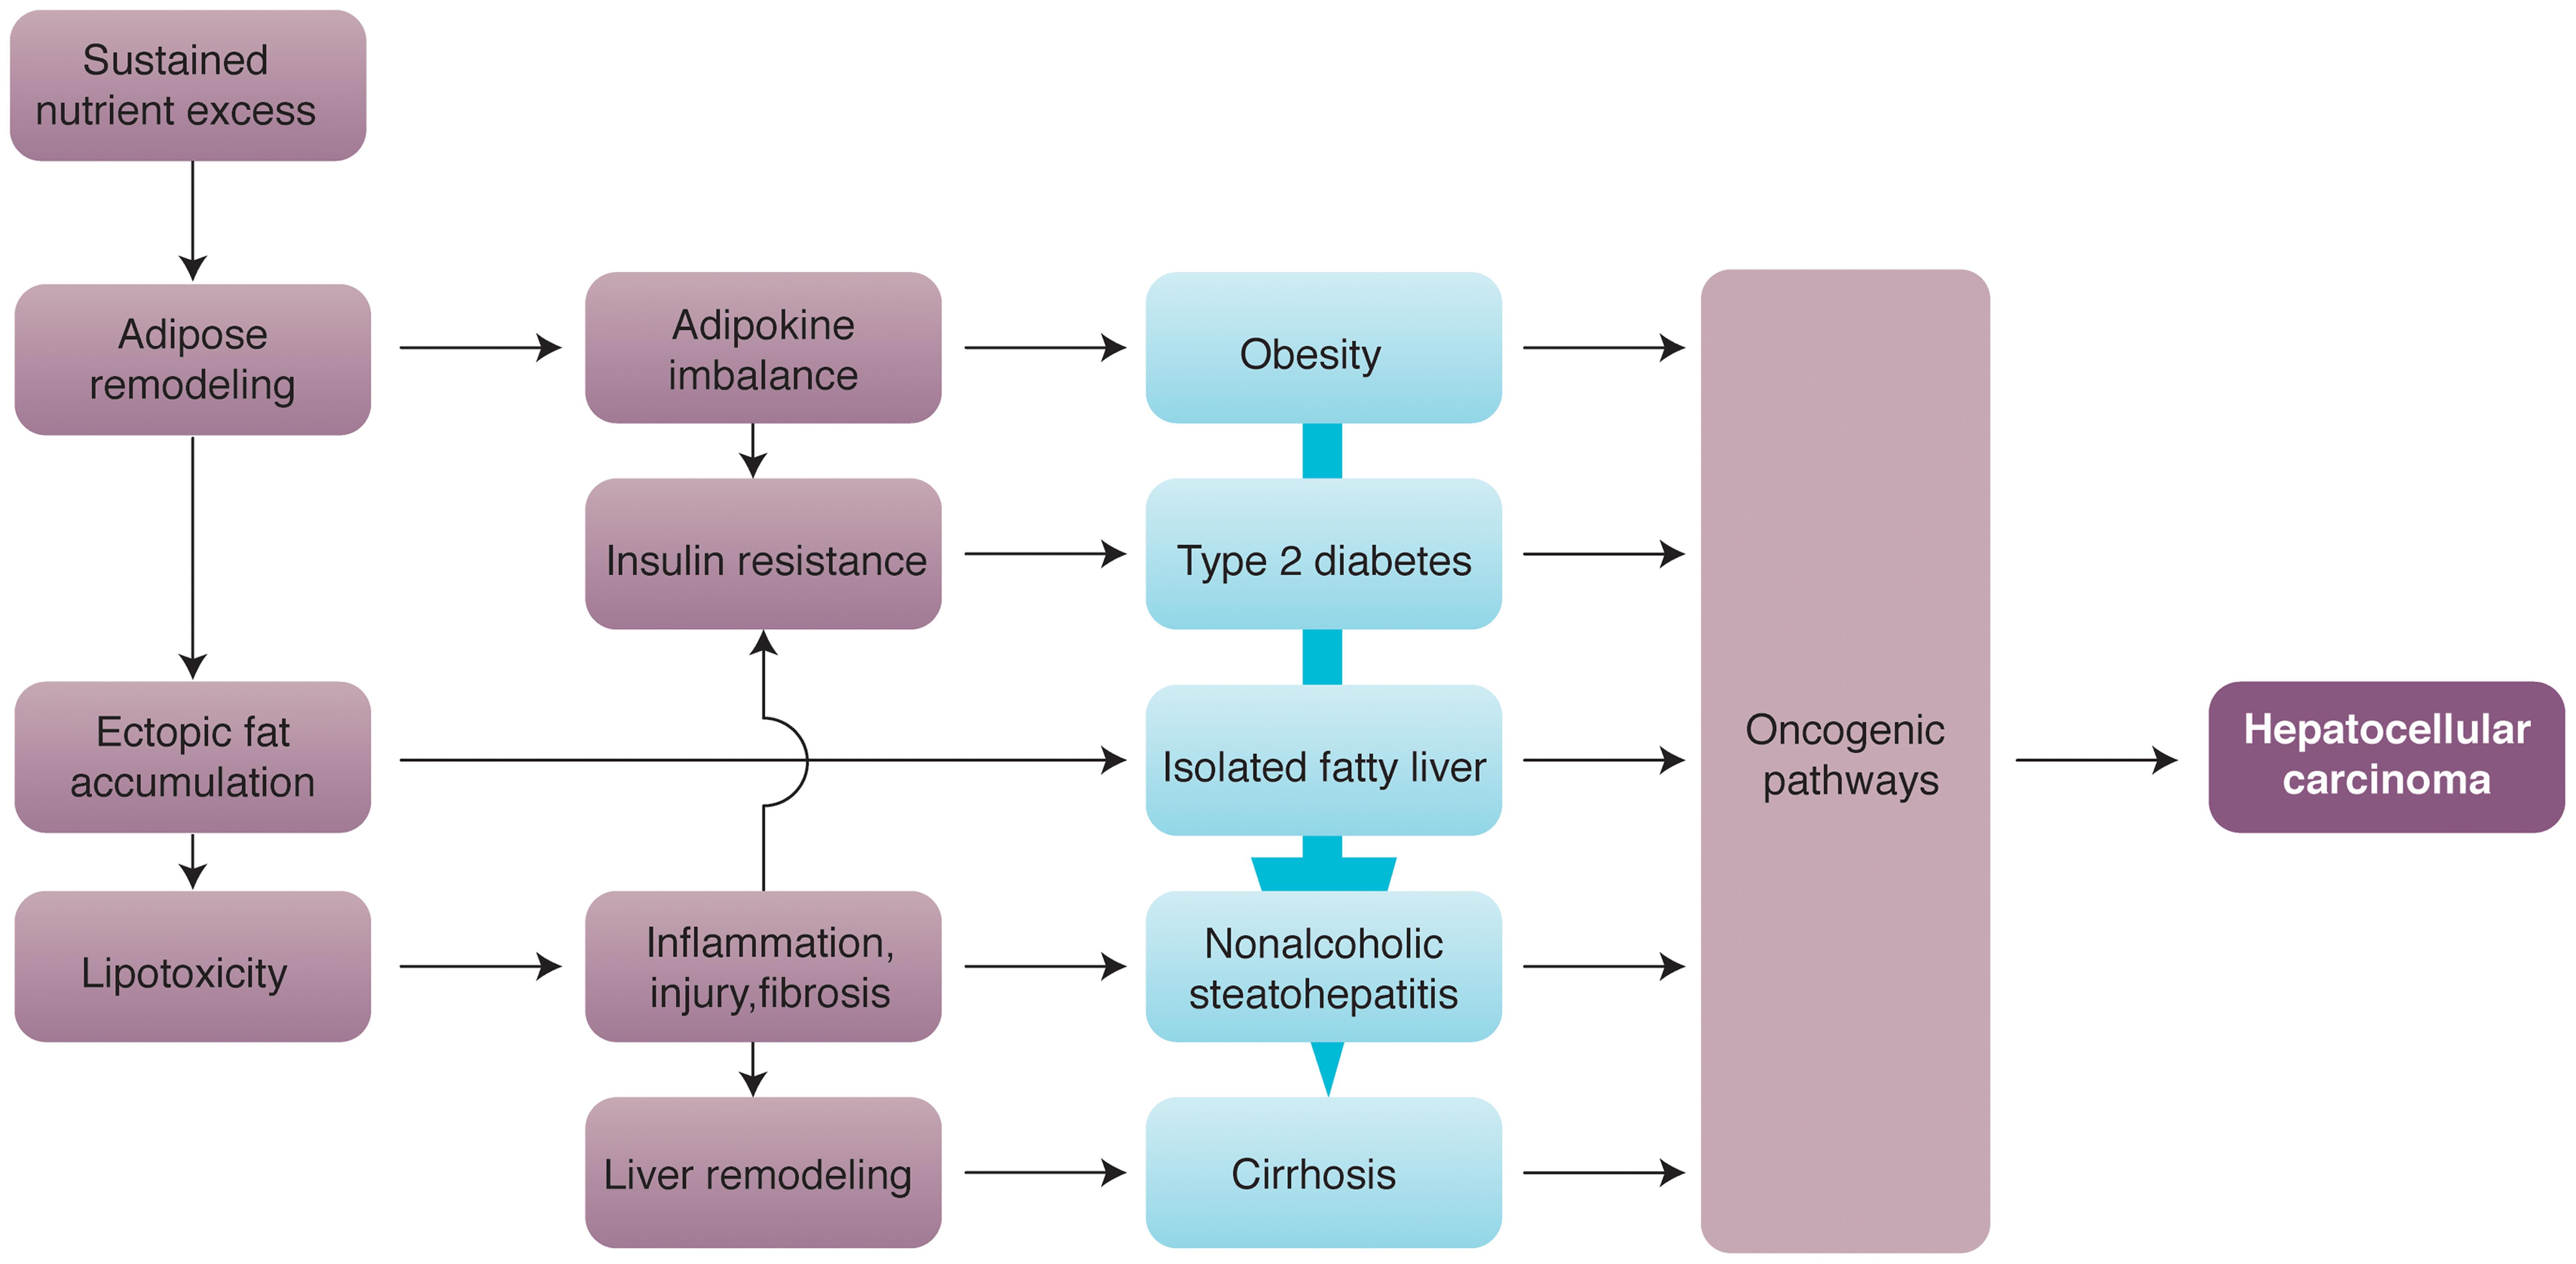 Major mechanisms of hepatocarcinogenesis in NAFLD